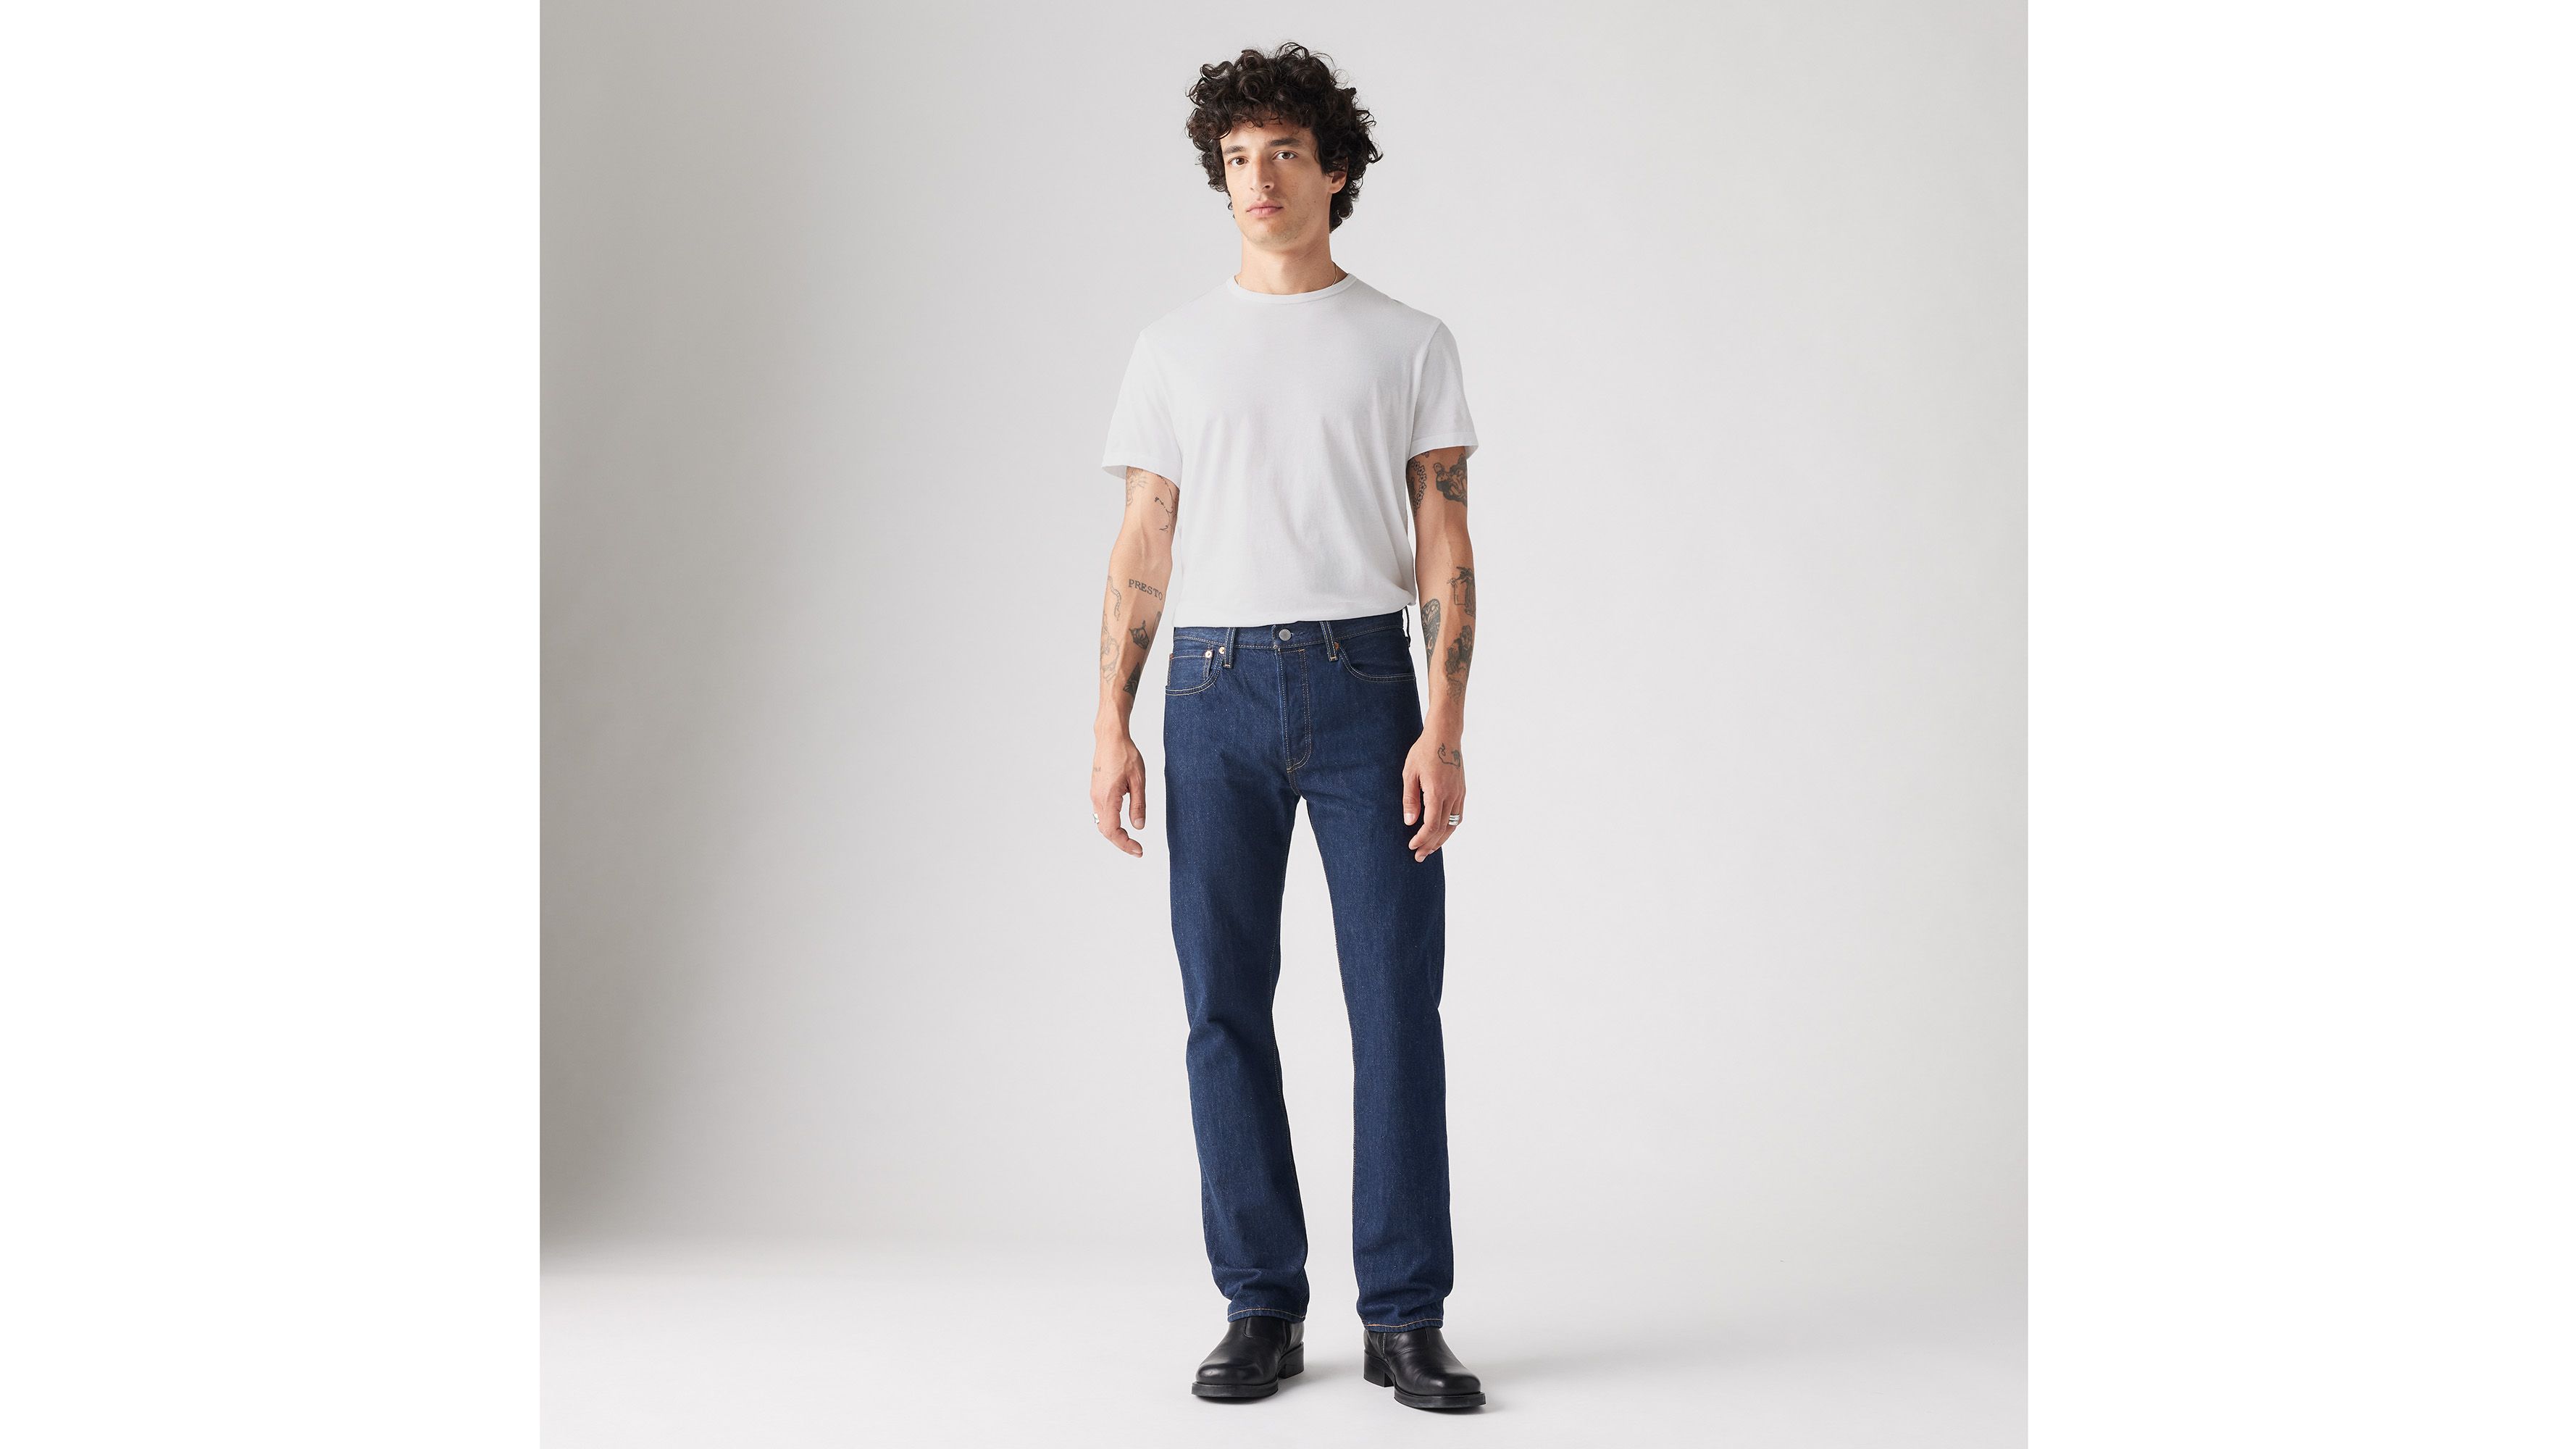 levis jeans indigo